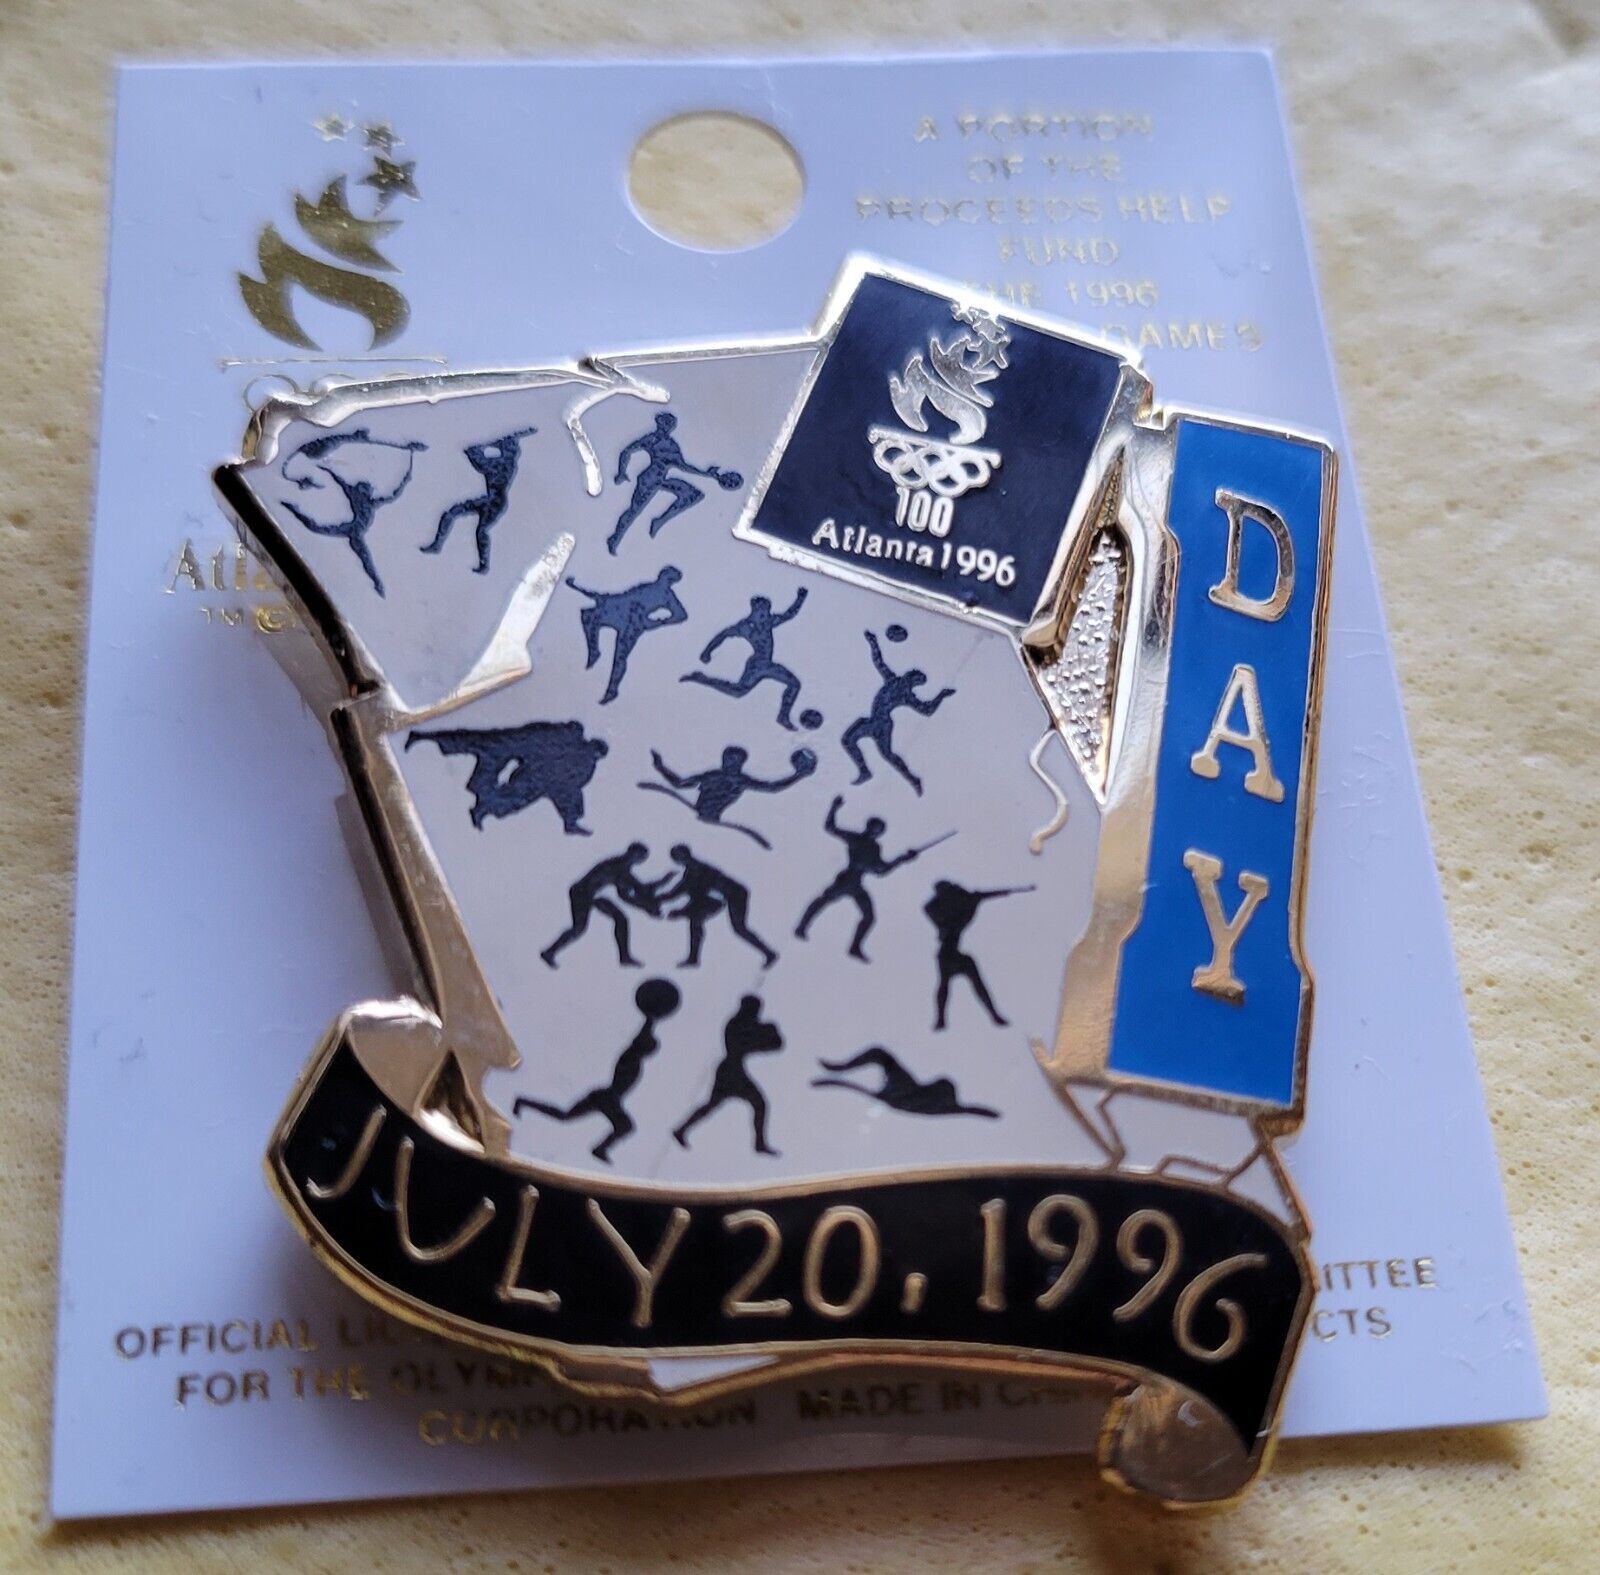 1996 Centennial Olympic Games Atlanta. July 20 First Day Pin.